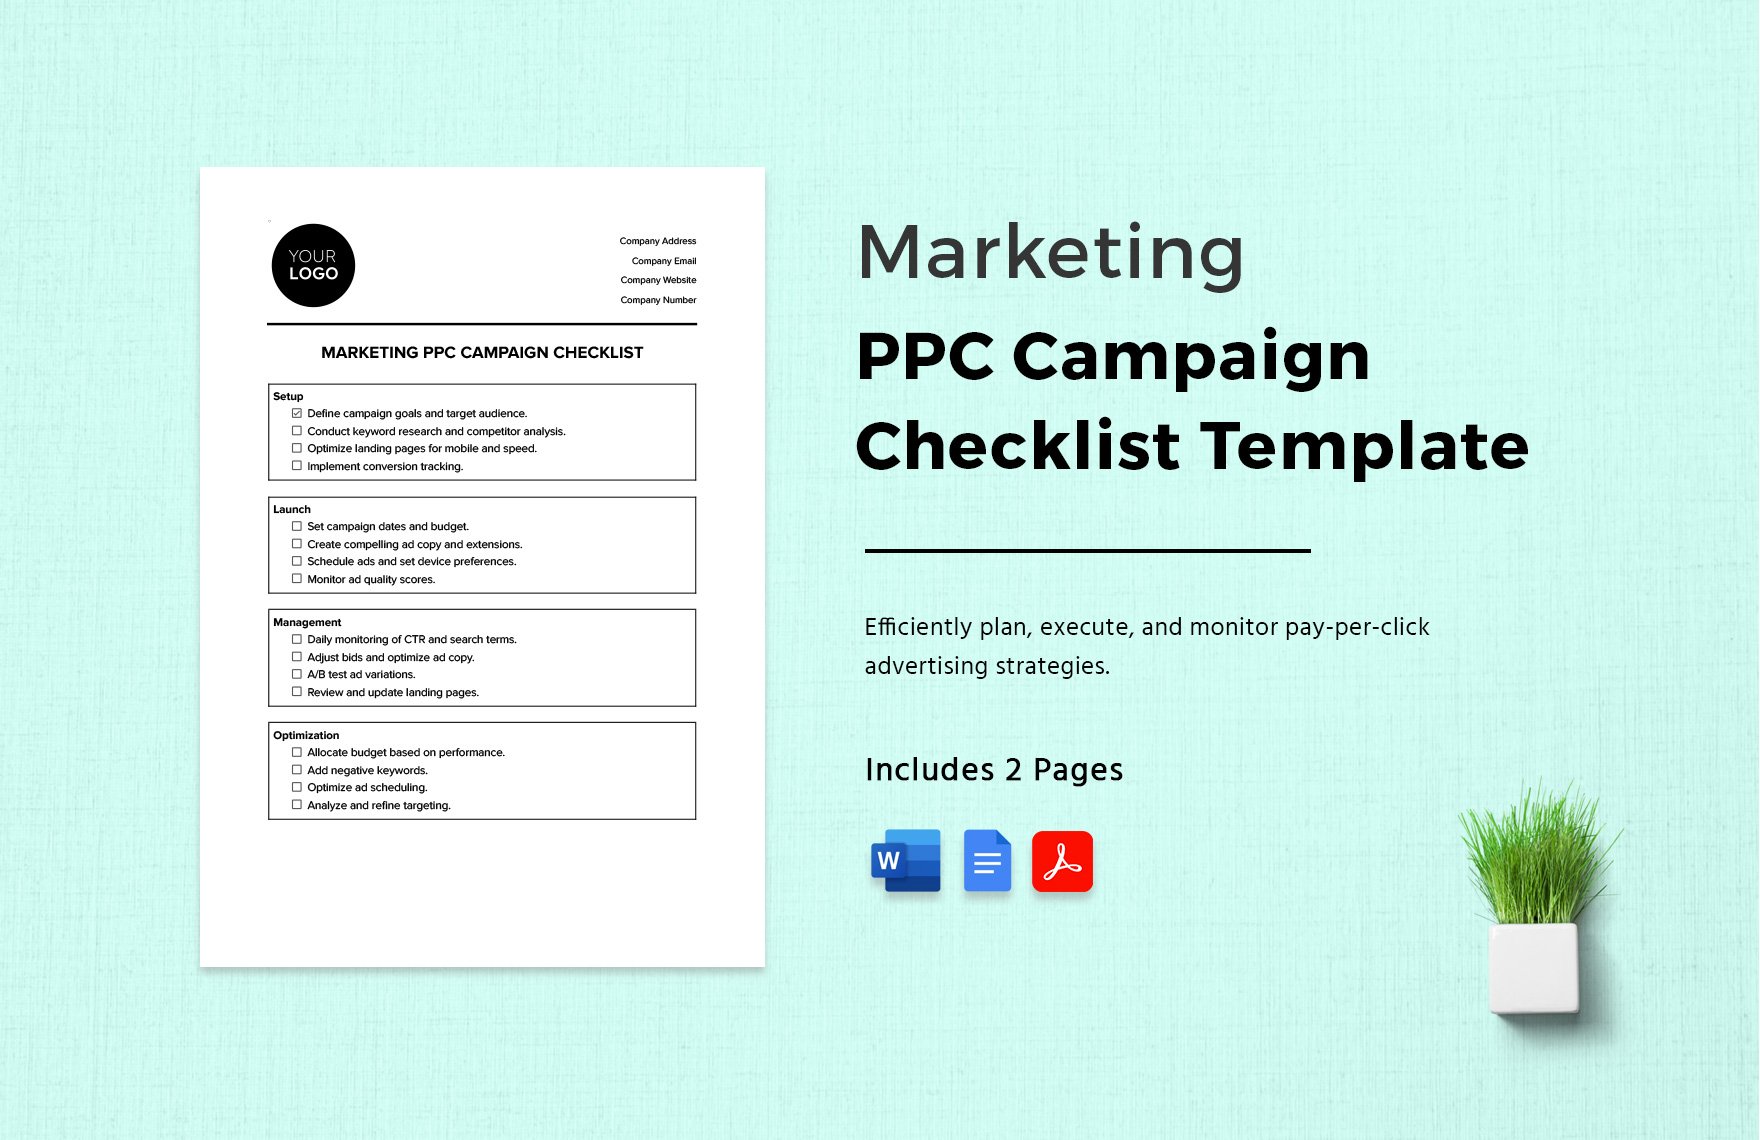 Marketing PPC Campaign Checklist Template in Word, Google Docs, PDF